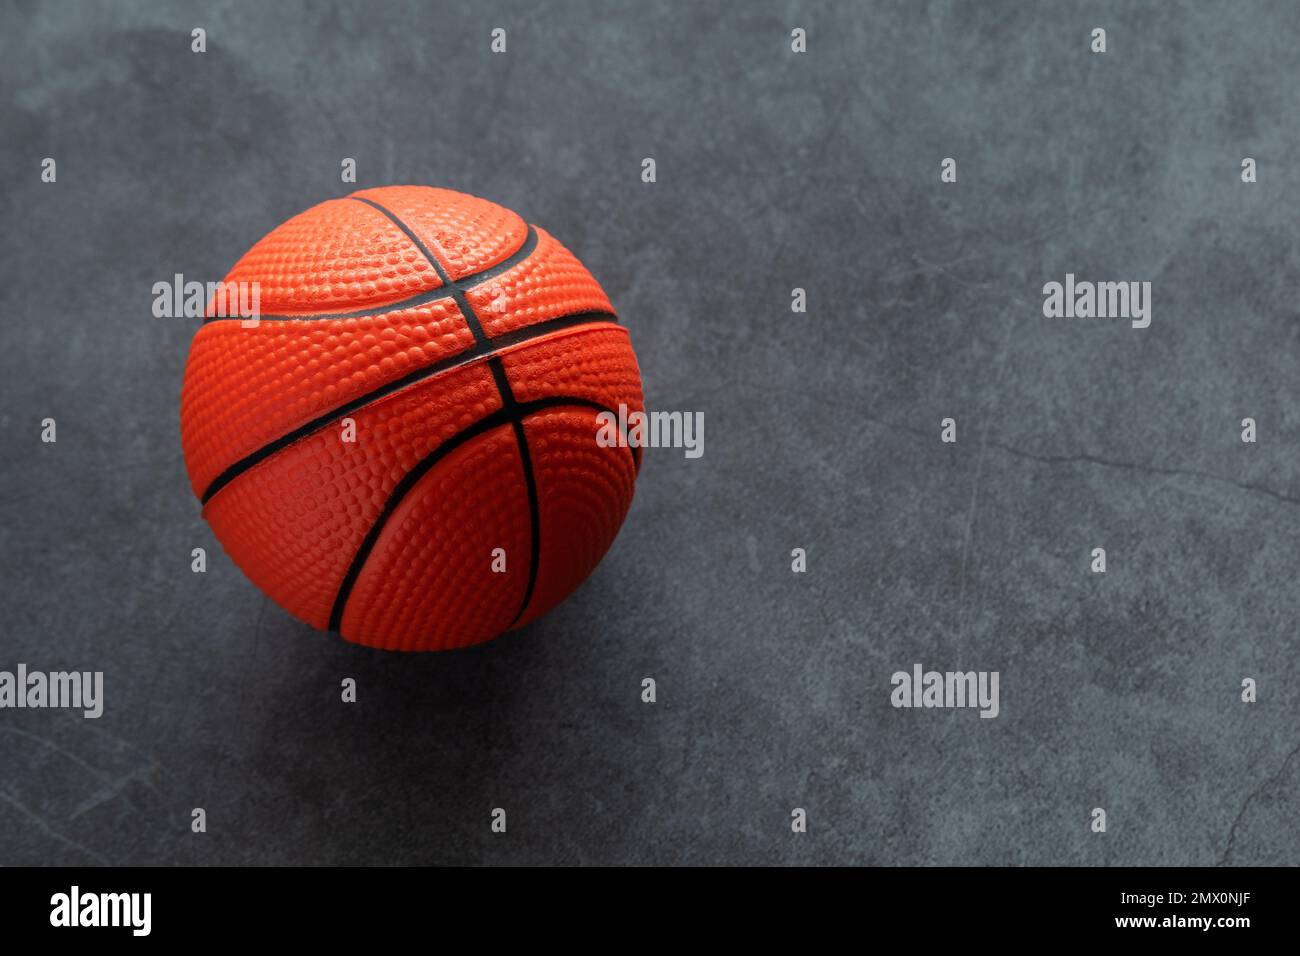 Small soft foam basketball on dark background Stock Photo